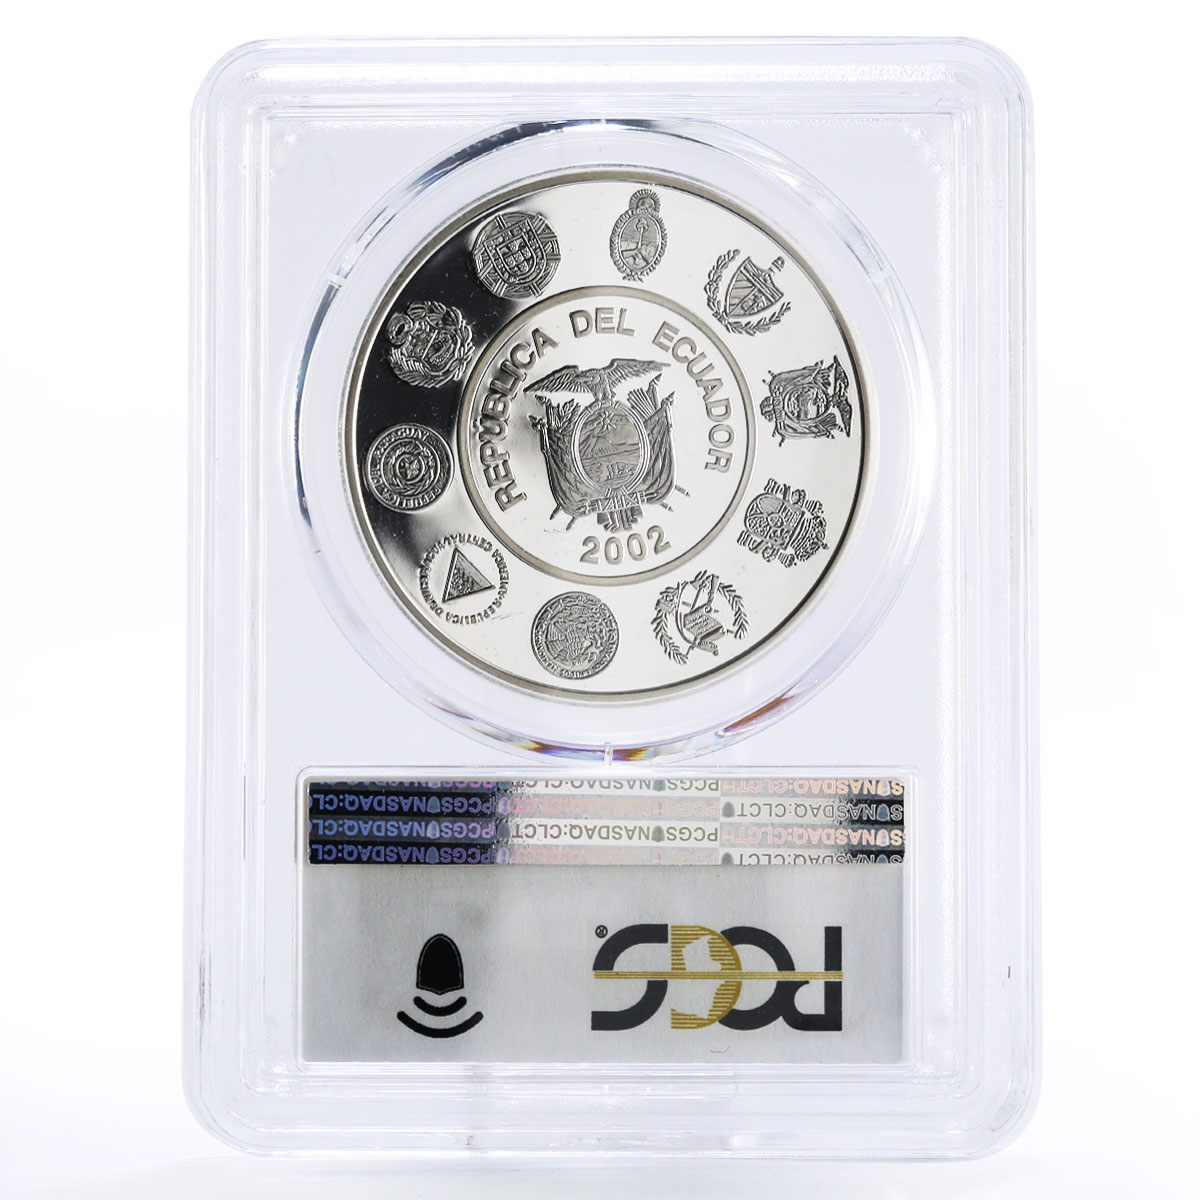 Ecuador 25000 sucres Balsawood Sailing Raft Ship PR68 PCGS silver coin 2002